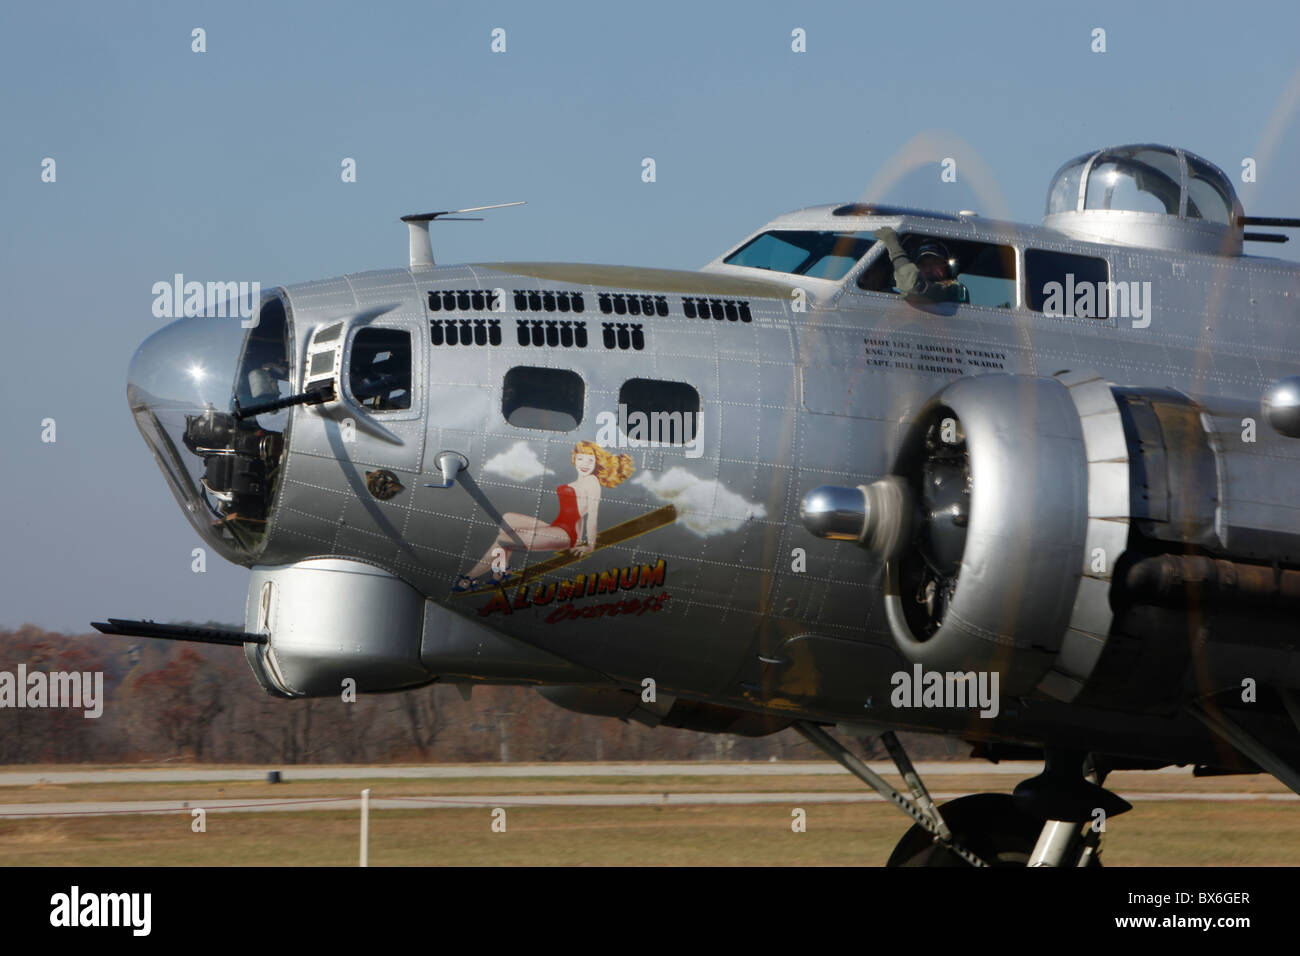 Aluminium bedeckt restaurierte b-17 Flying Fortress WWII Ära Bomber Flug Nase Kunst Frau blond Motoren laufende Nase Stockfoto